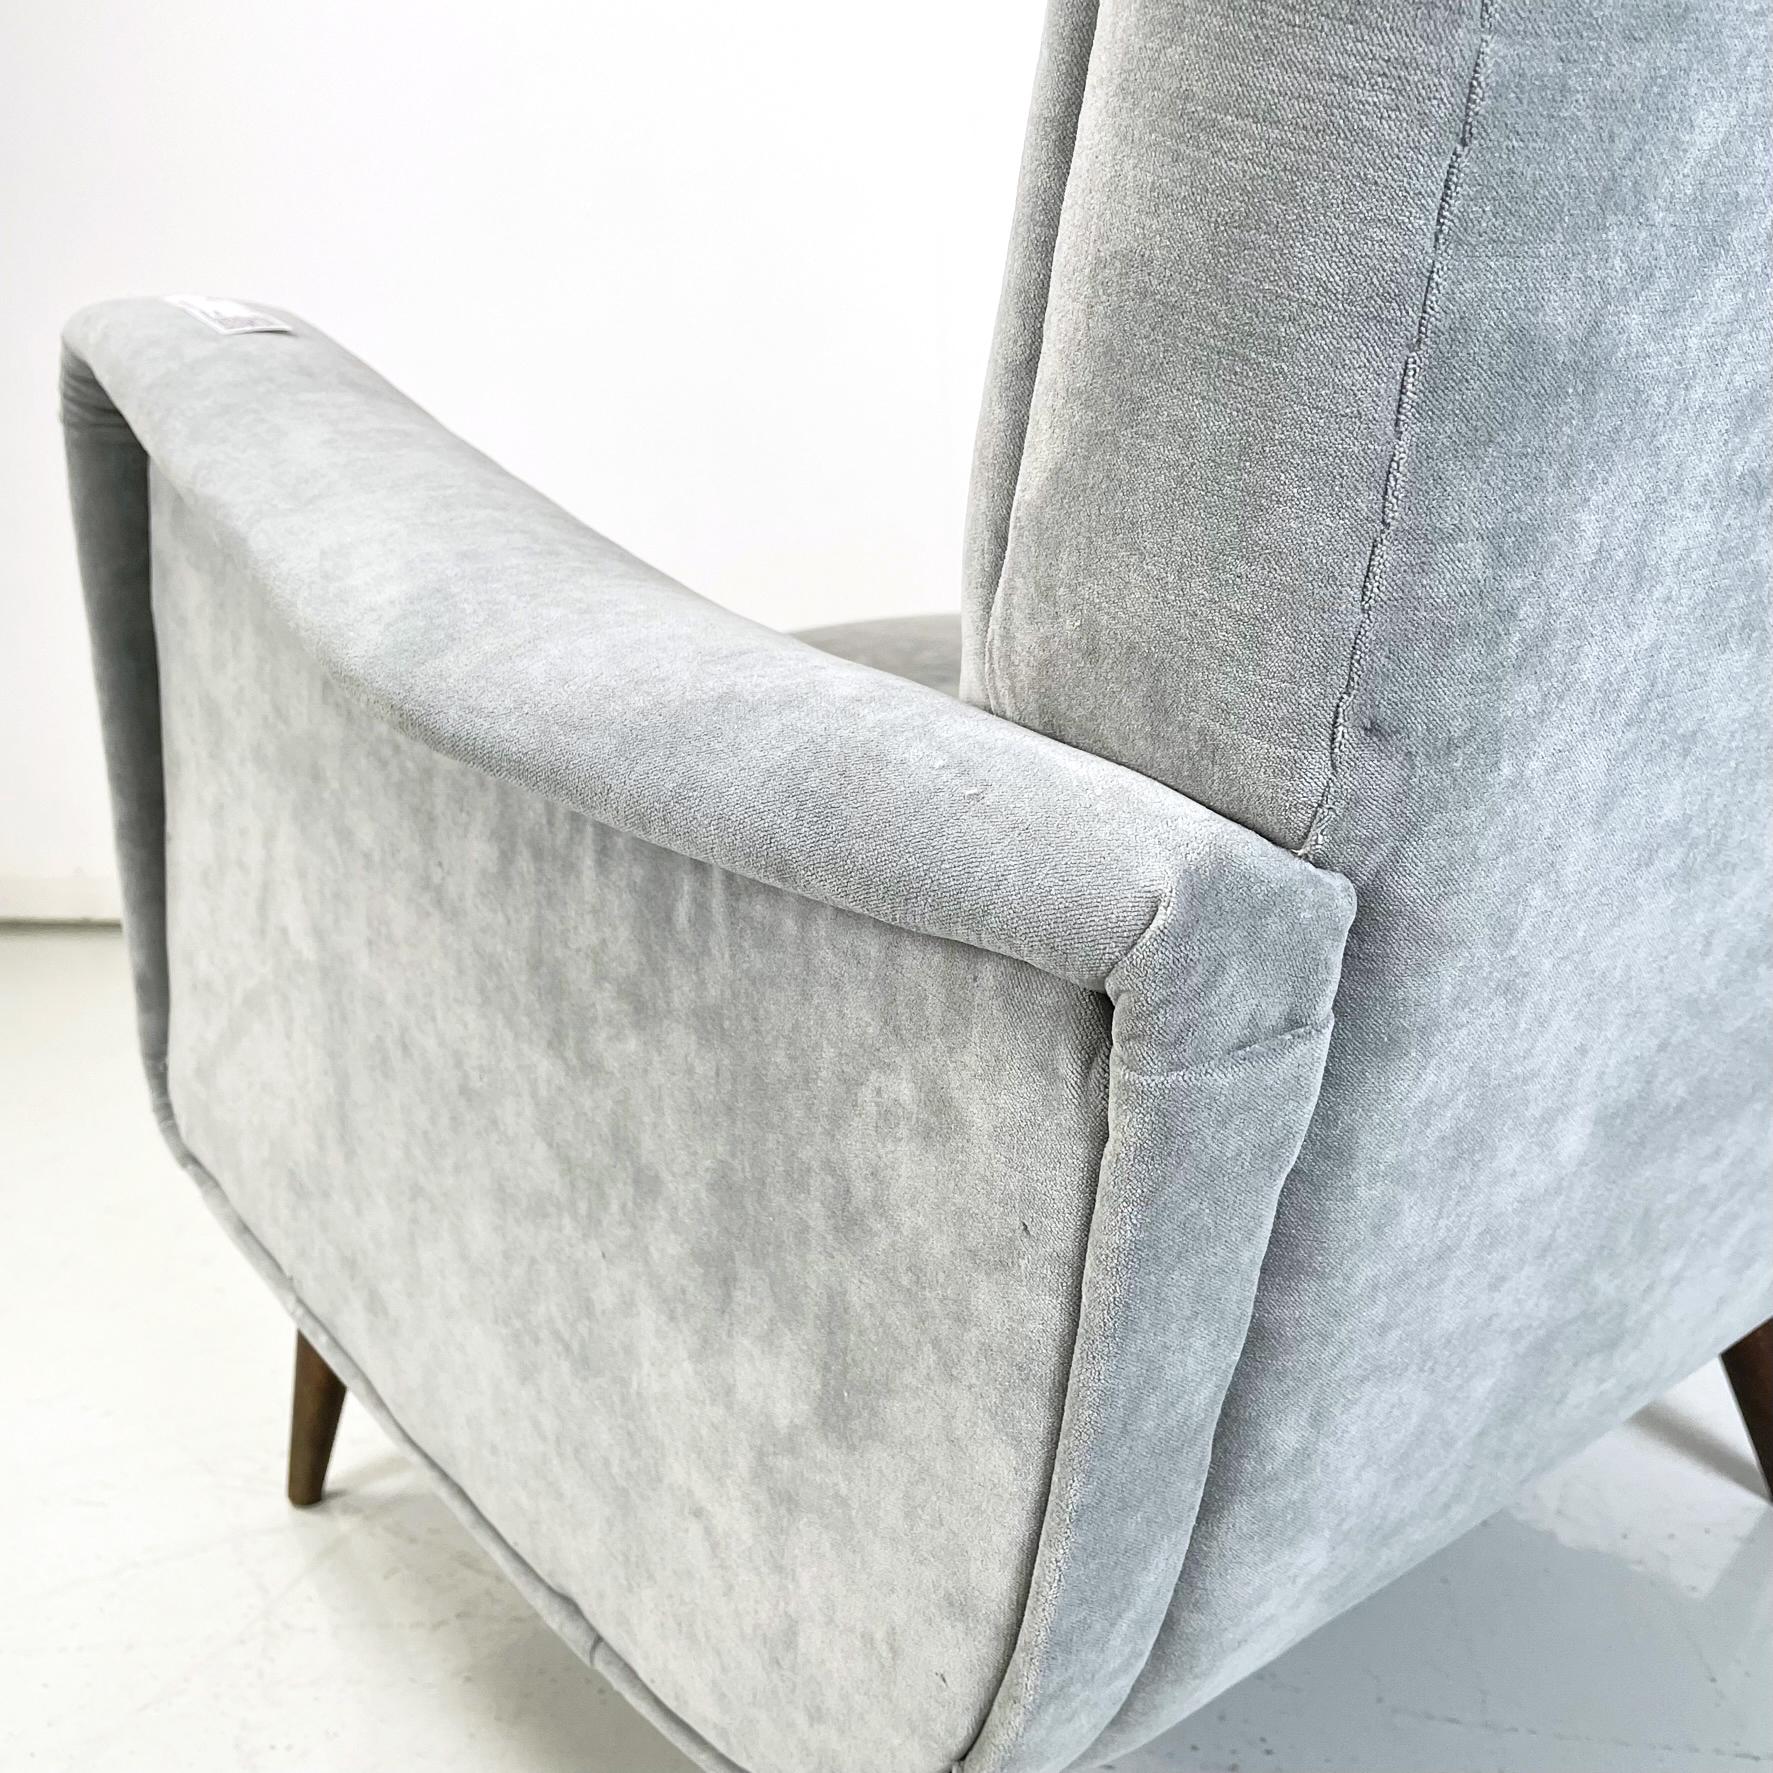 Italian Mid-Century Modern Armchairs in Light Gray Velvet and Wood, 1960s For Sale 4